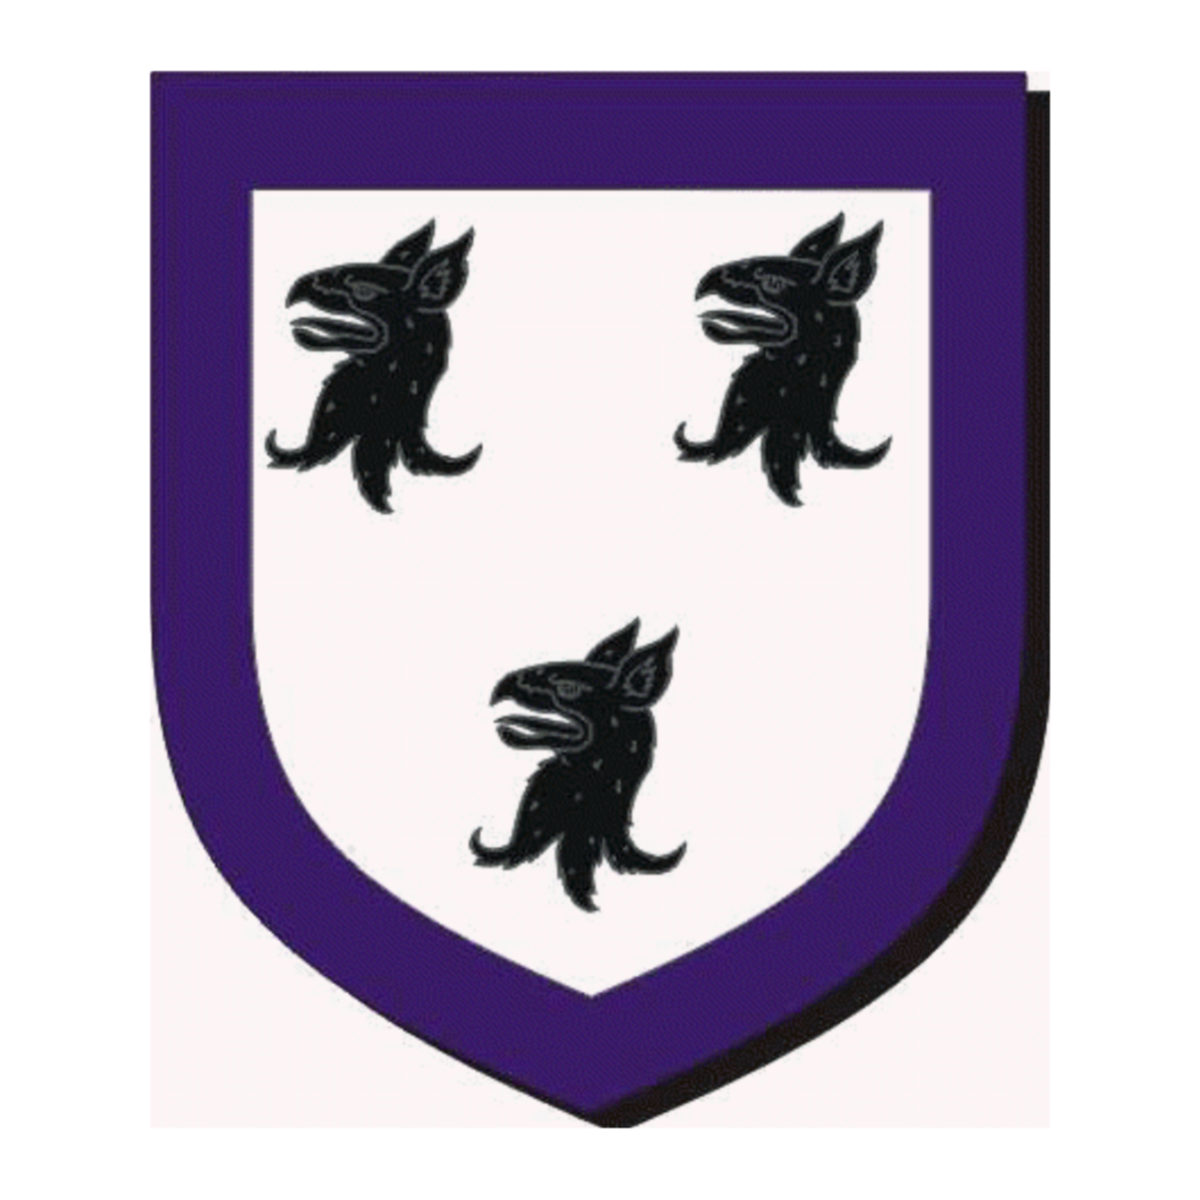 Coat of arms of familySharp